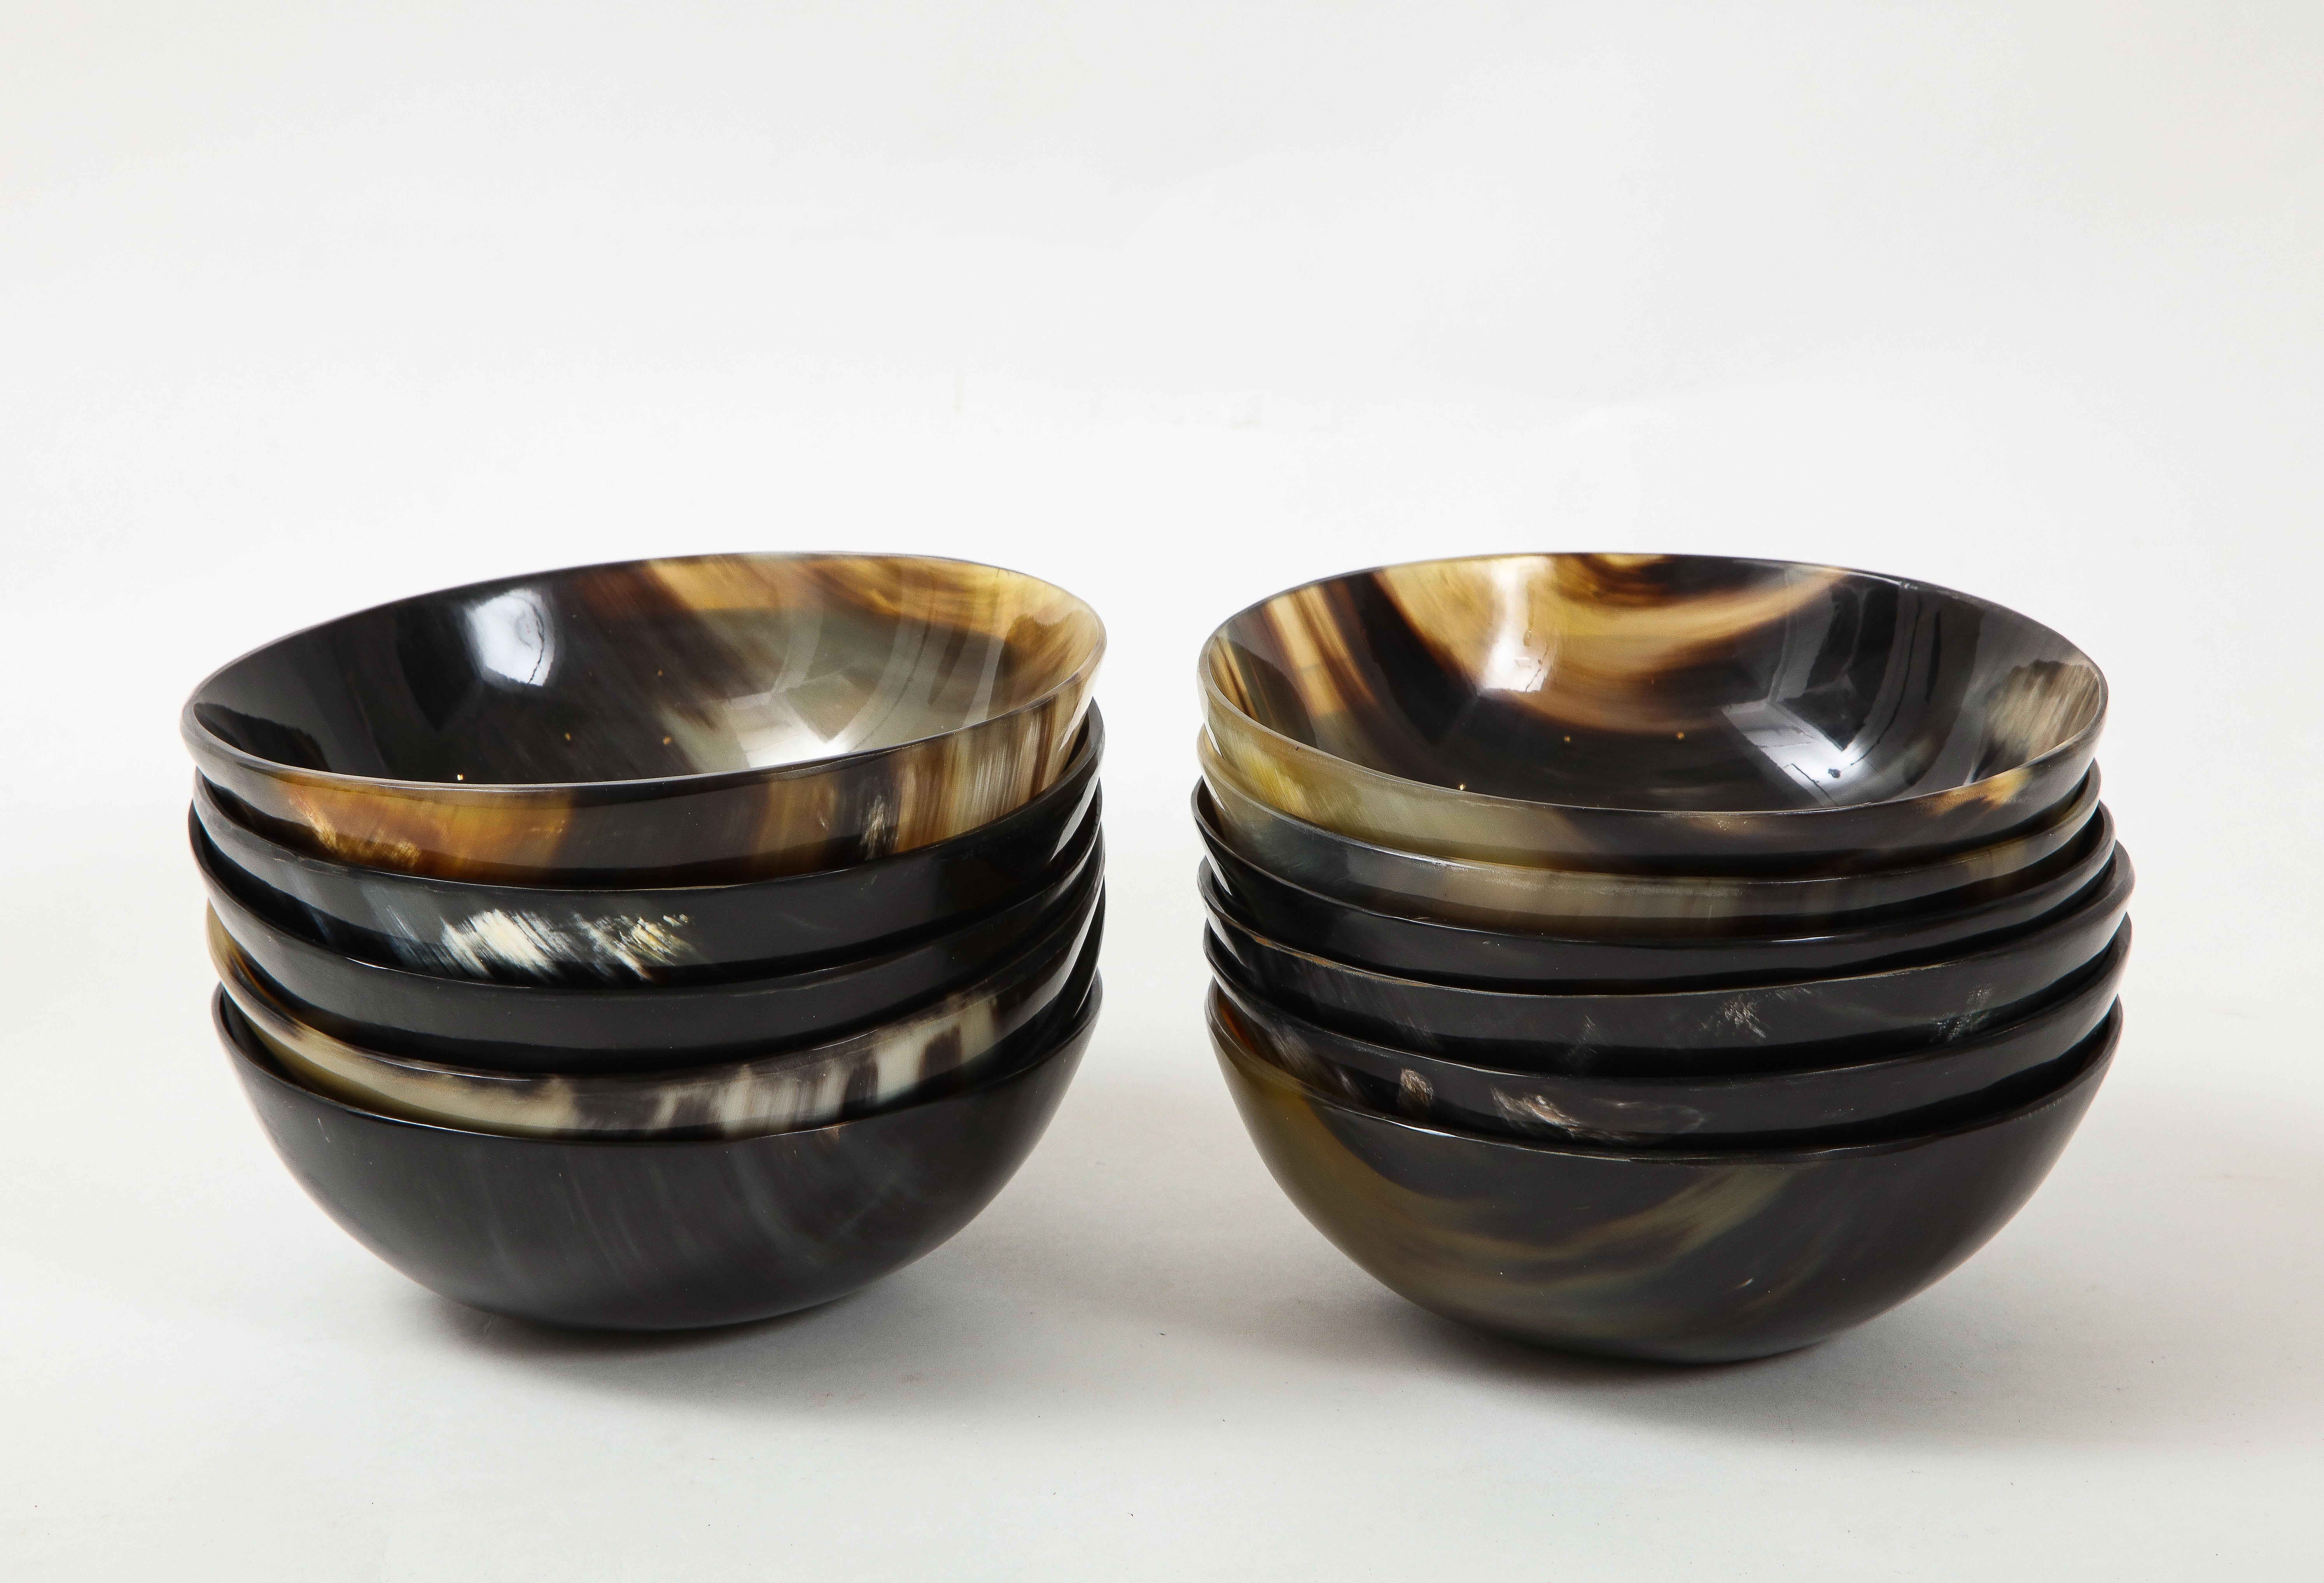 Set of 12 hand made polished horn bowls, hand wash/damp cloth only, no dishwasher.